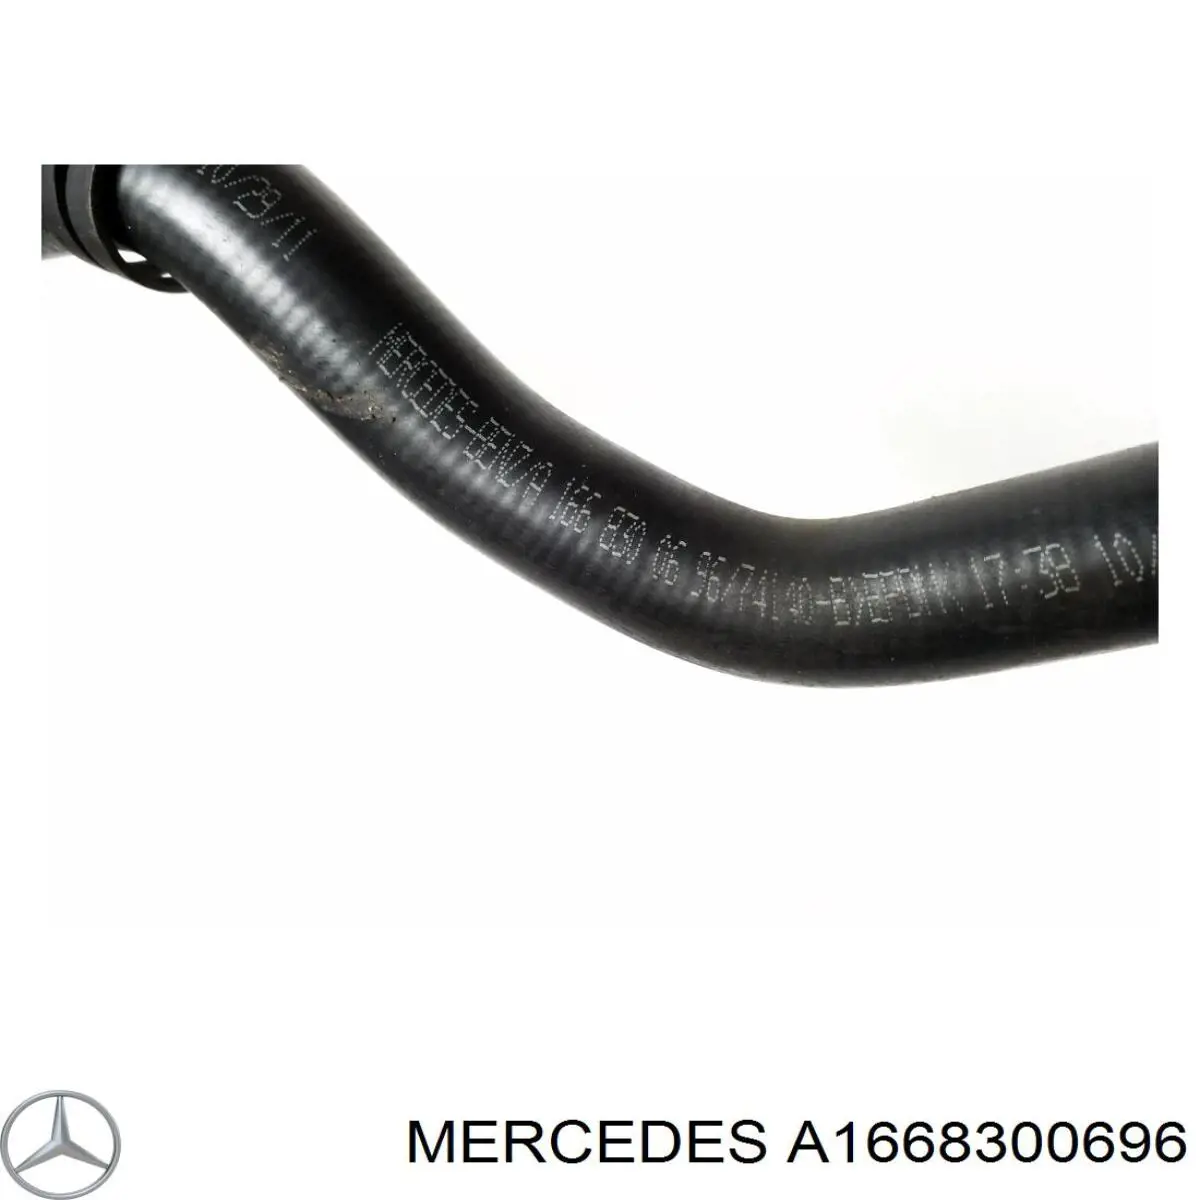 A1668300696 Mercedes manguera de refrigeración